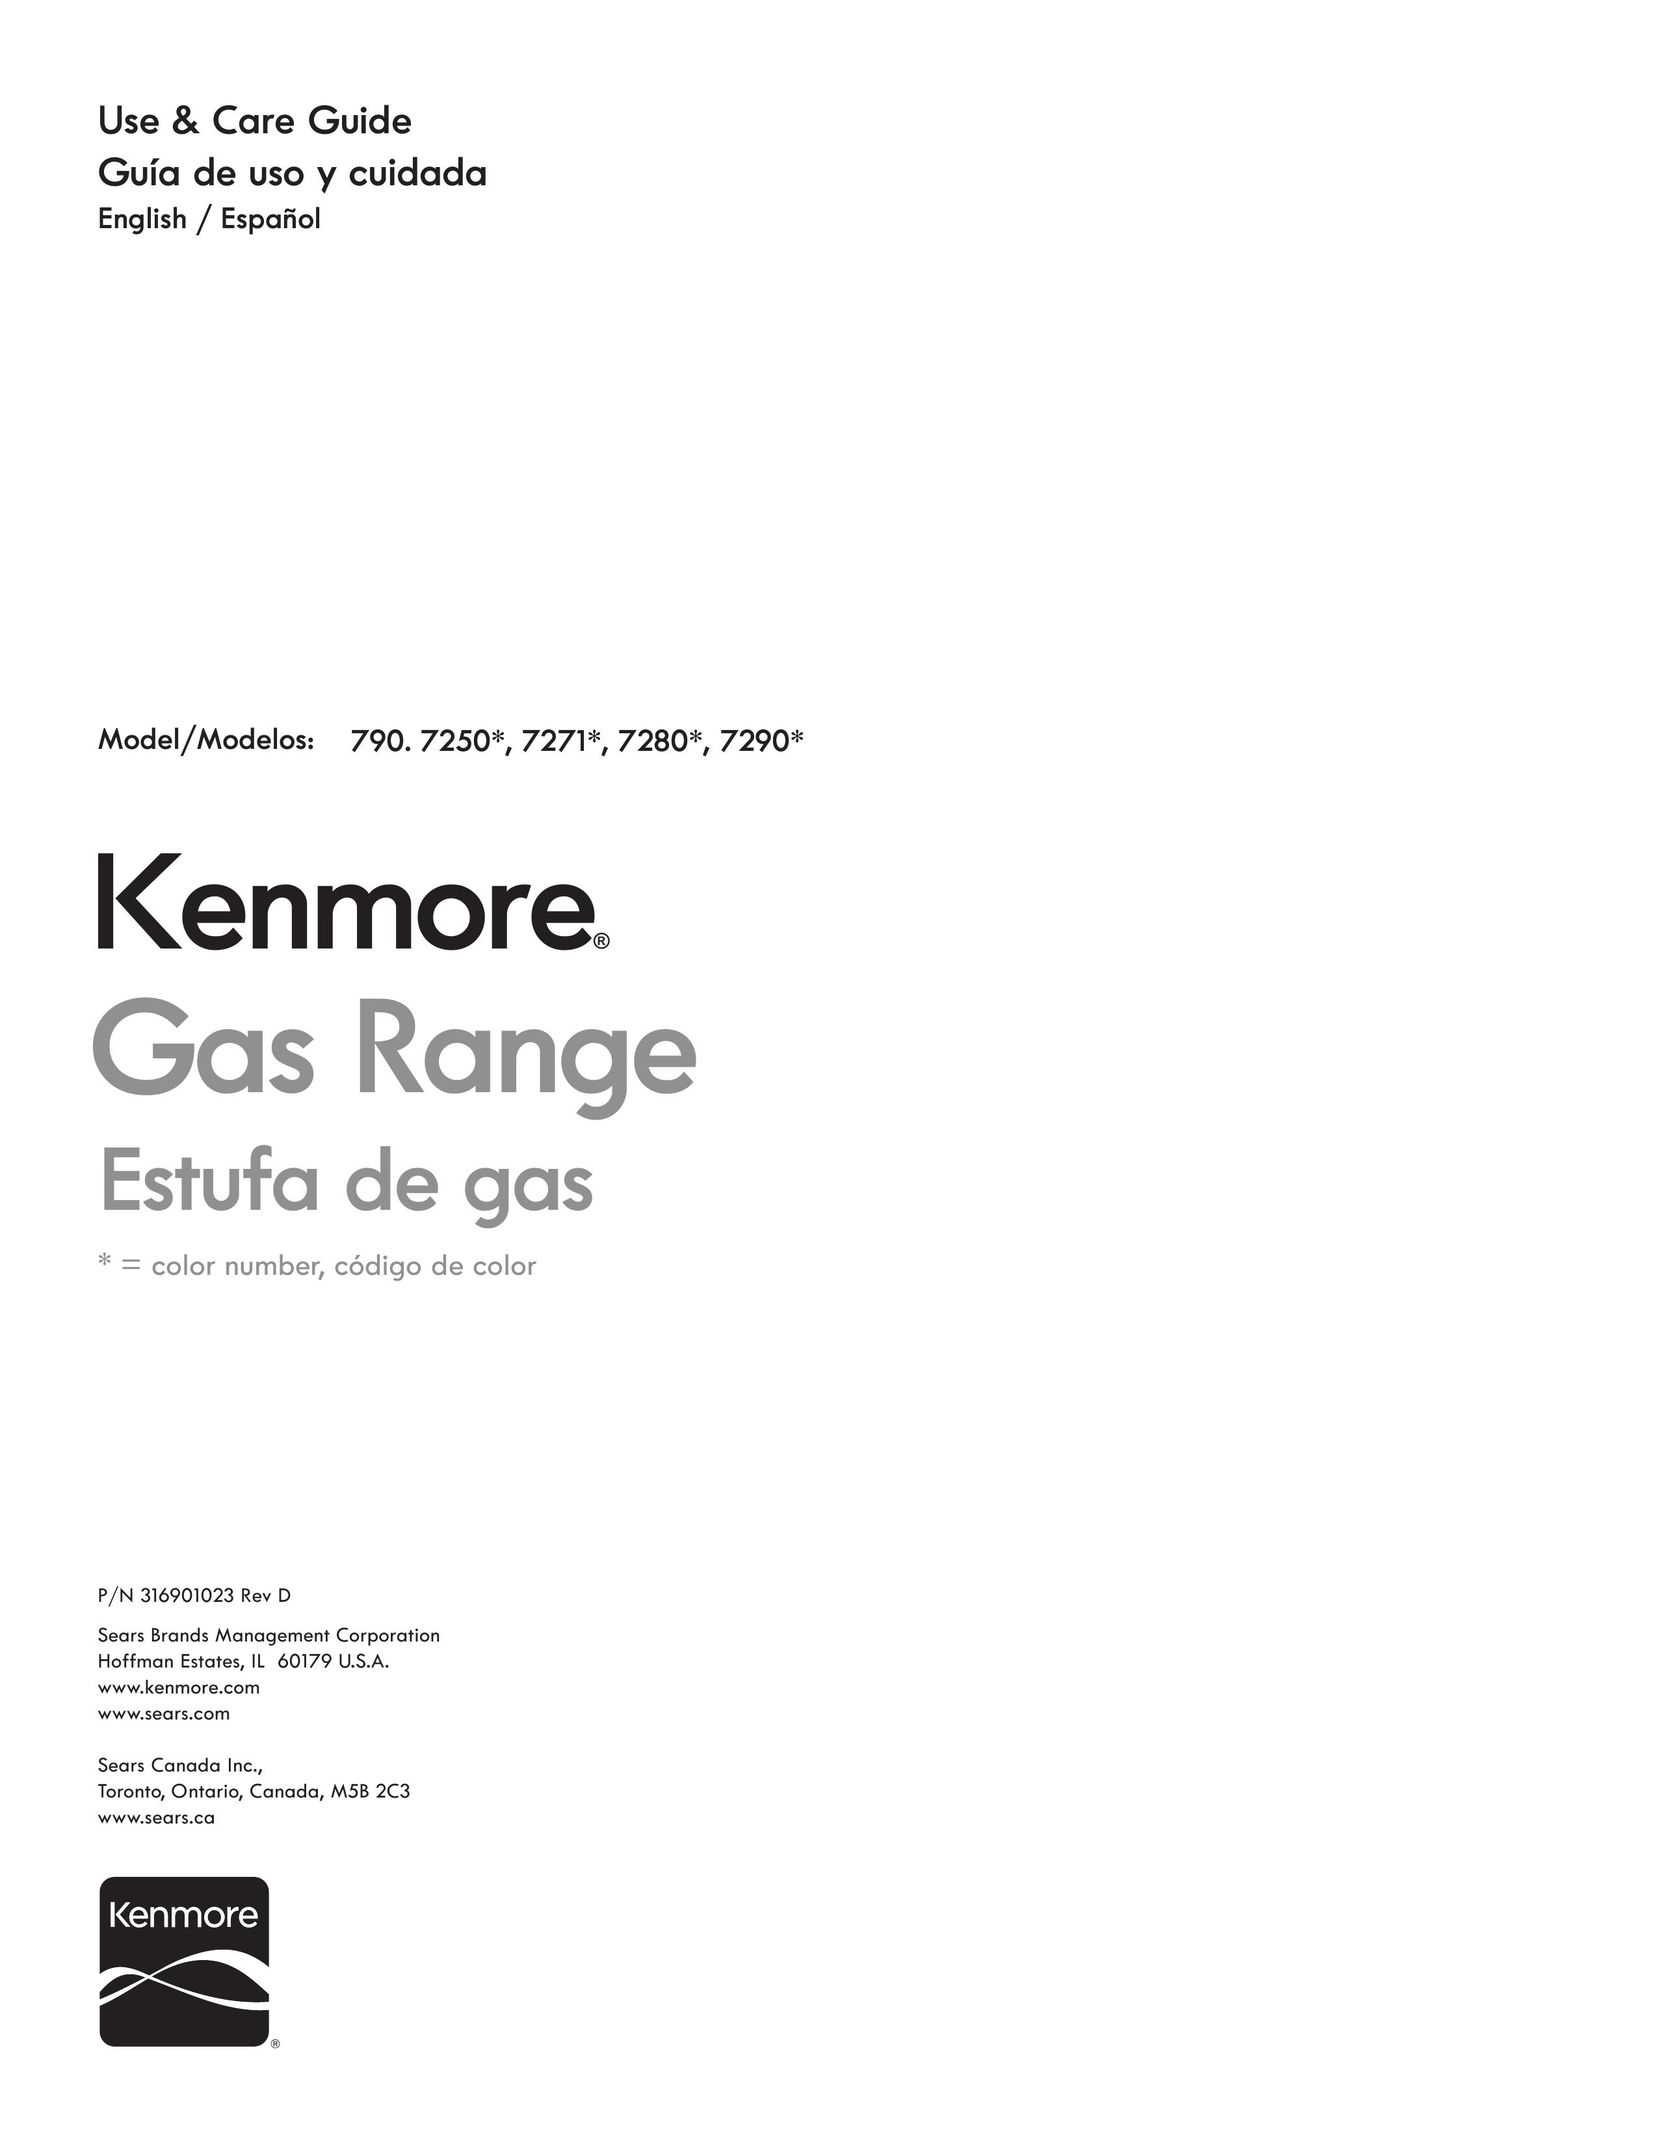 Kenmore 7271 Range User Manual